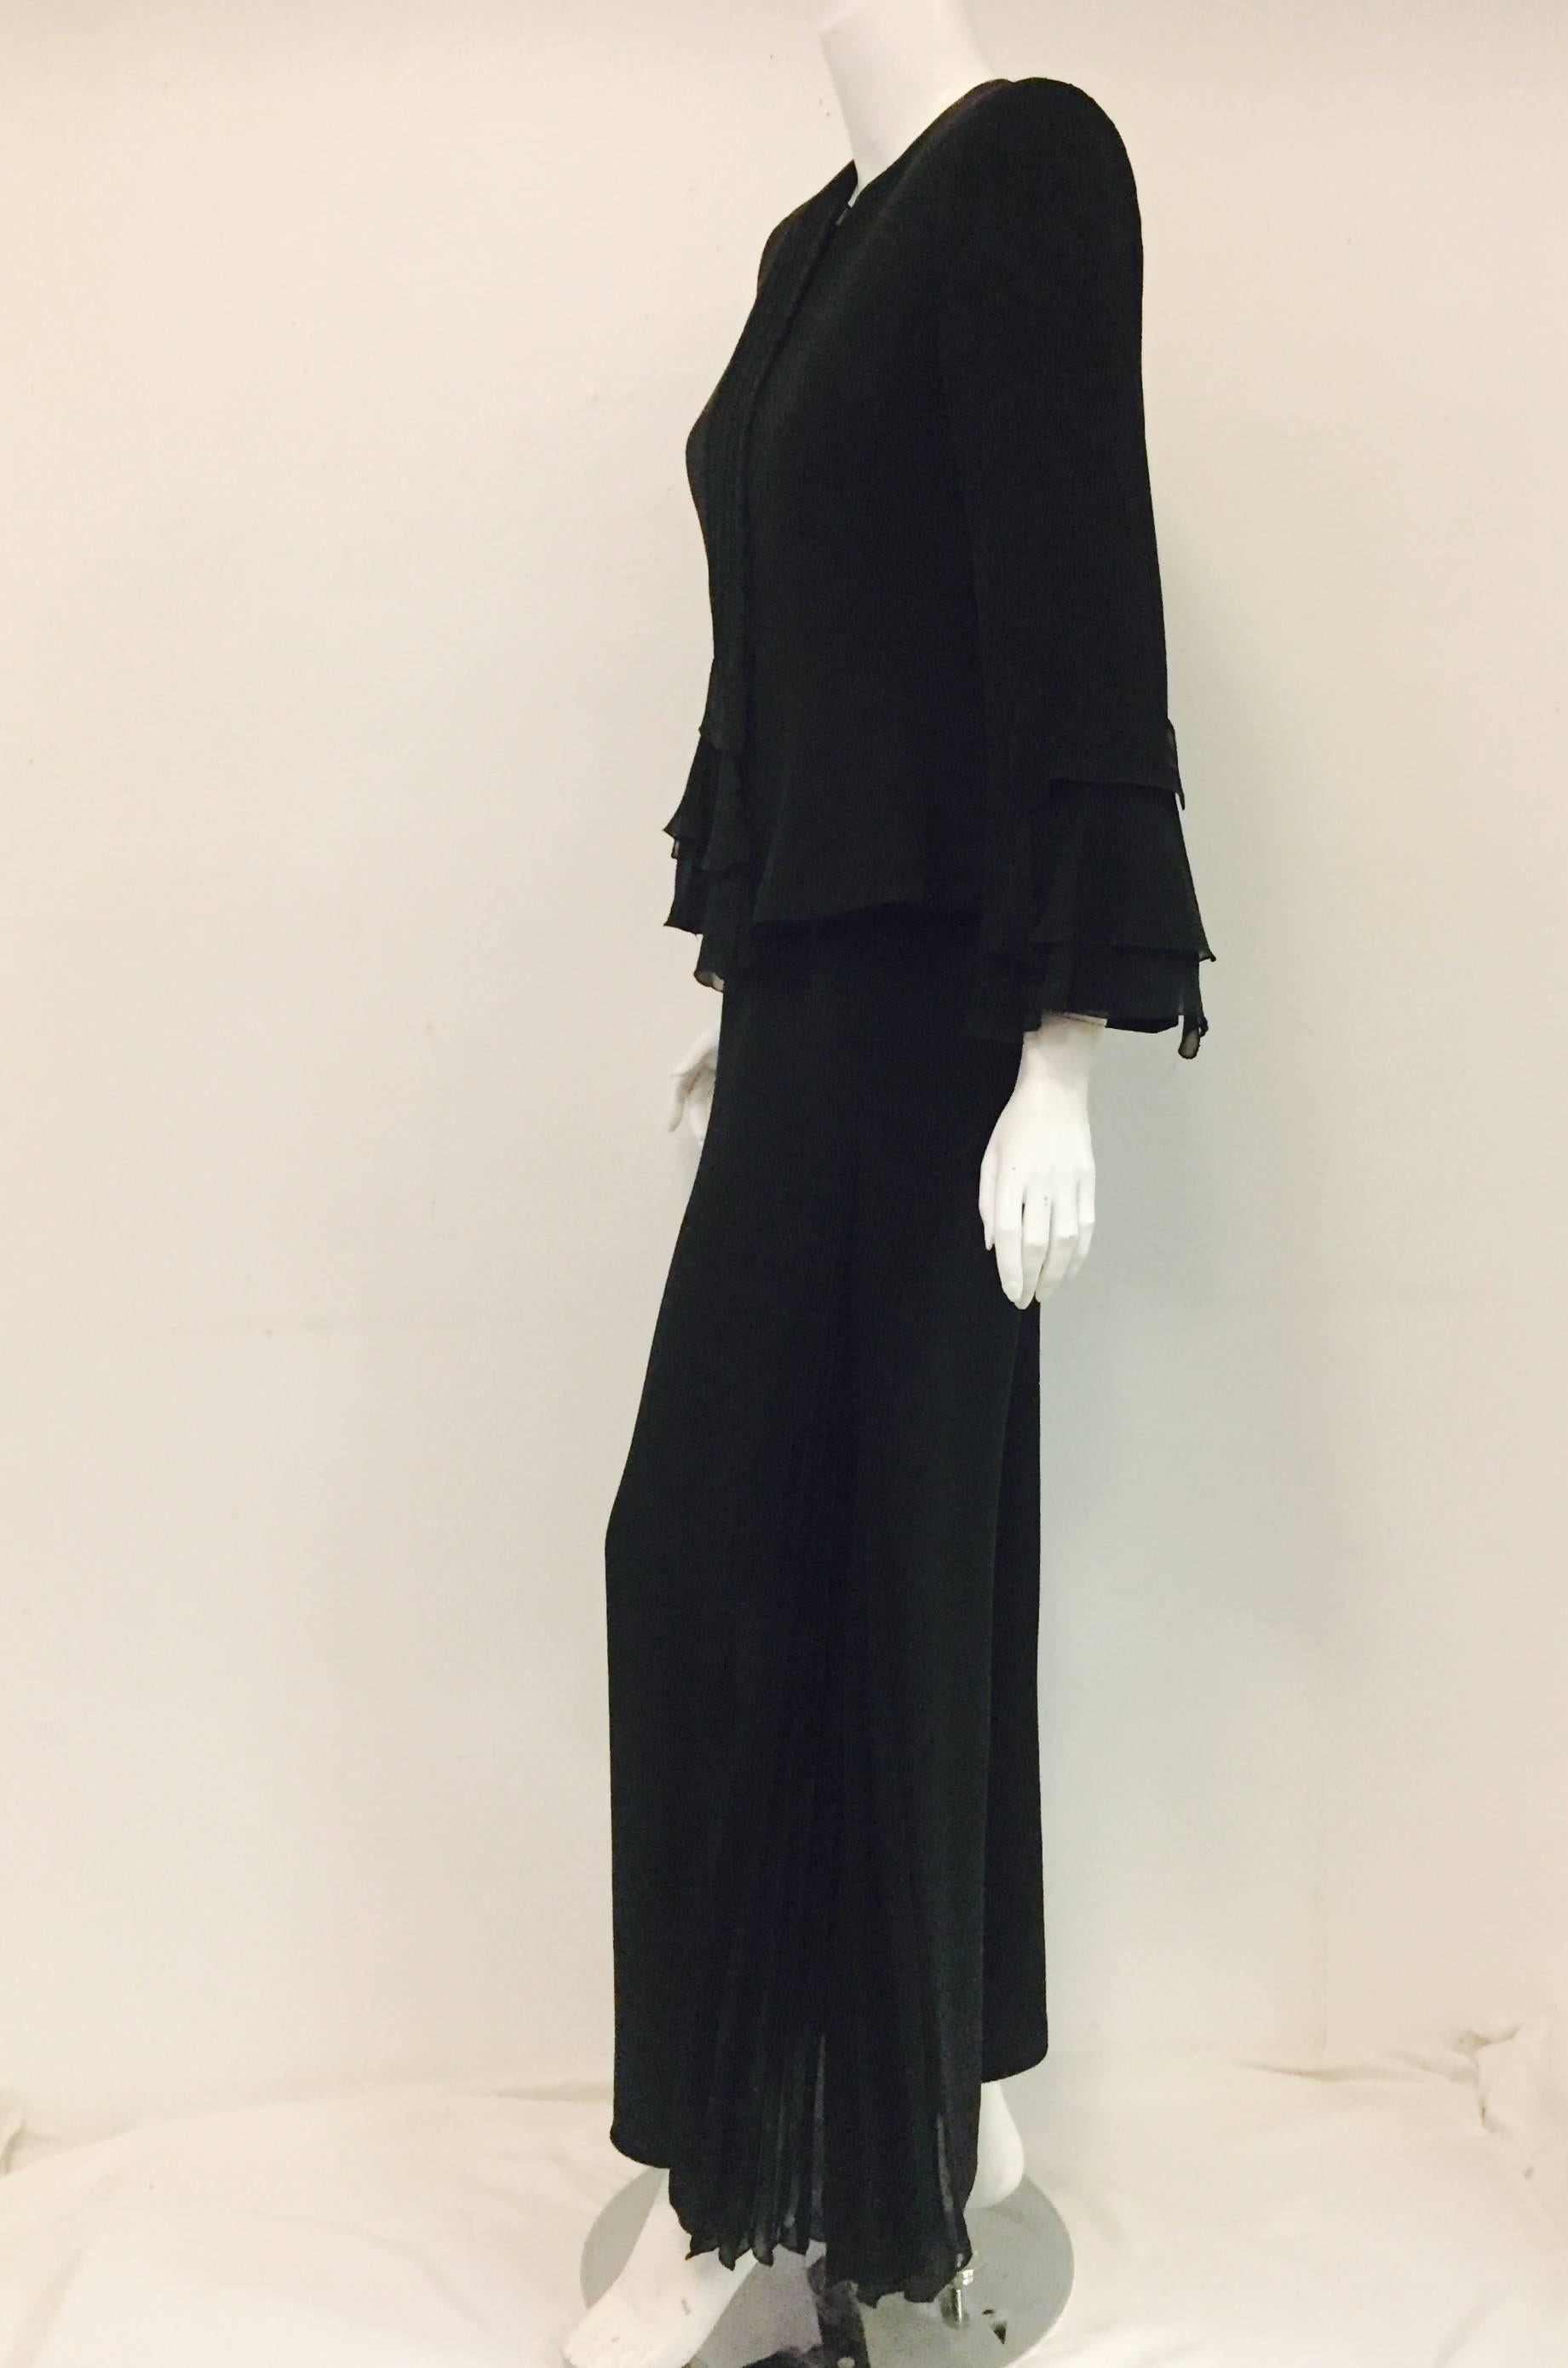 Women's Glamorous Giorgio Armani Black Pleated Silk Pantsuit with Side Pleats on Pants